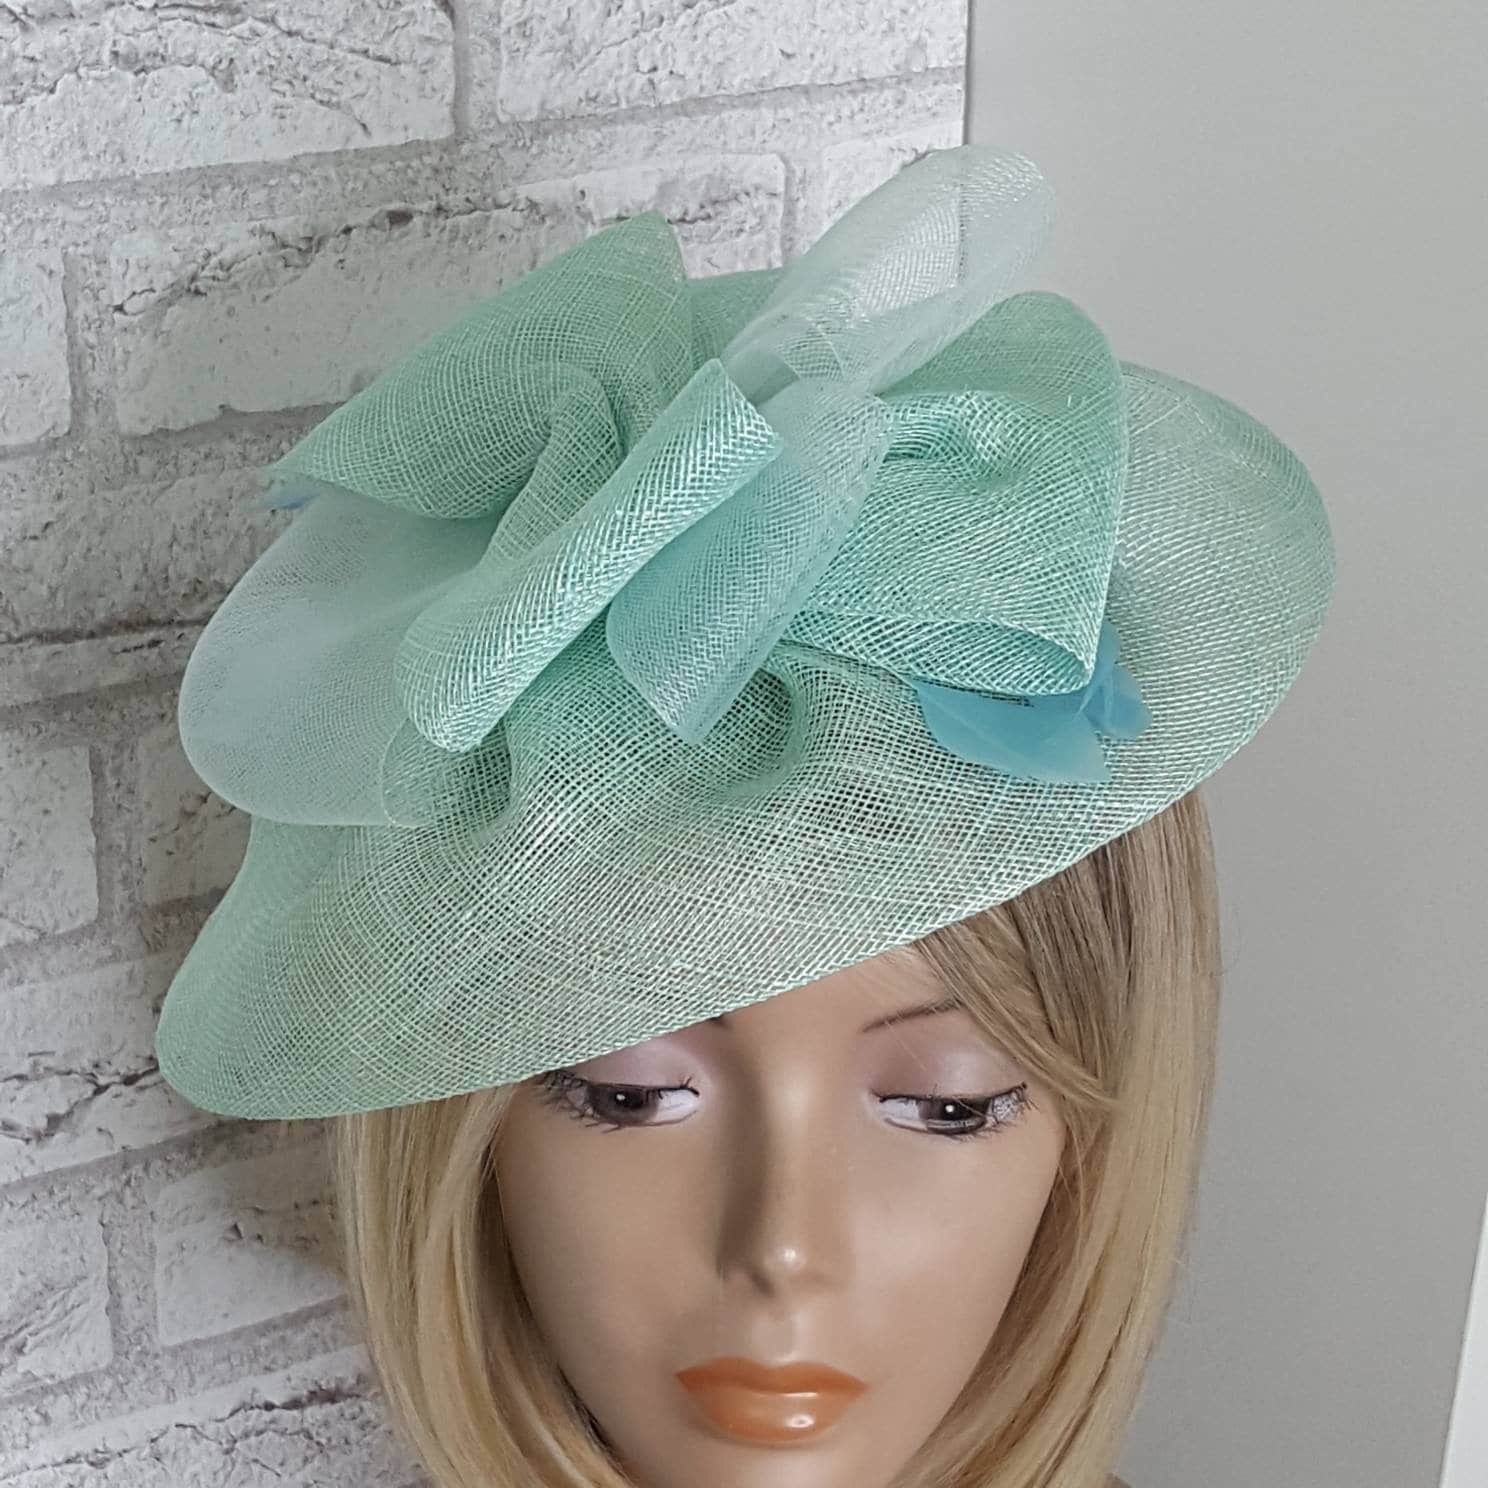 Crinoline fascinator hat Kate Middleton style,Fancy wedding hat for mother of the bride